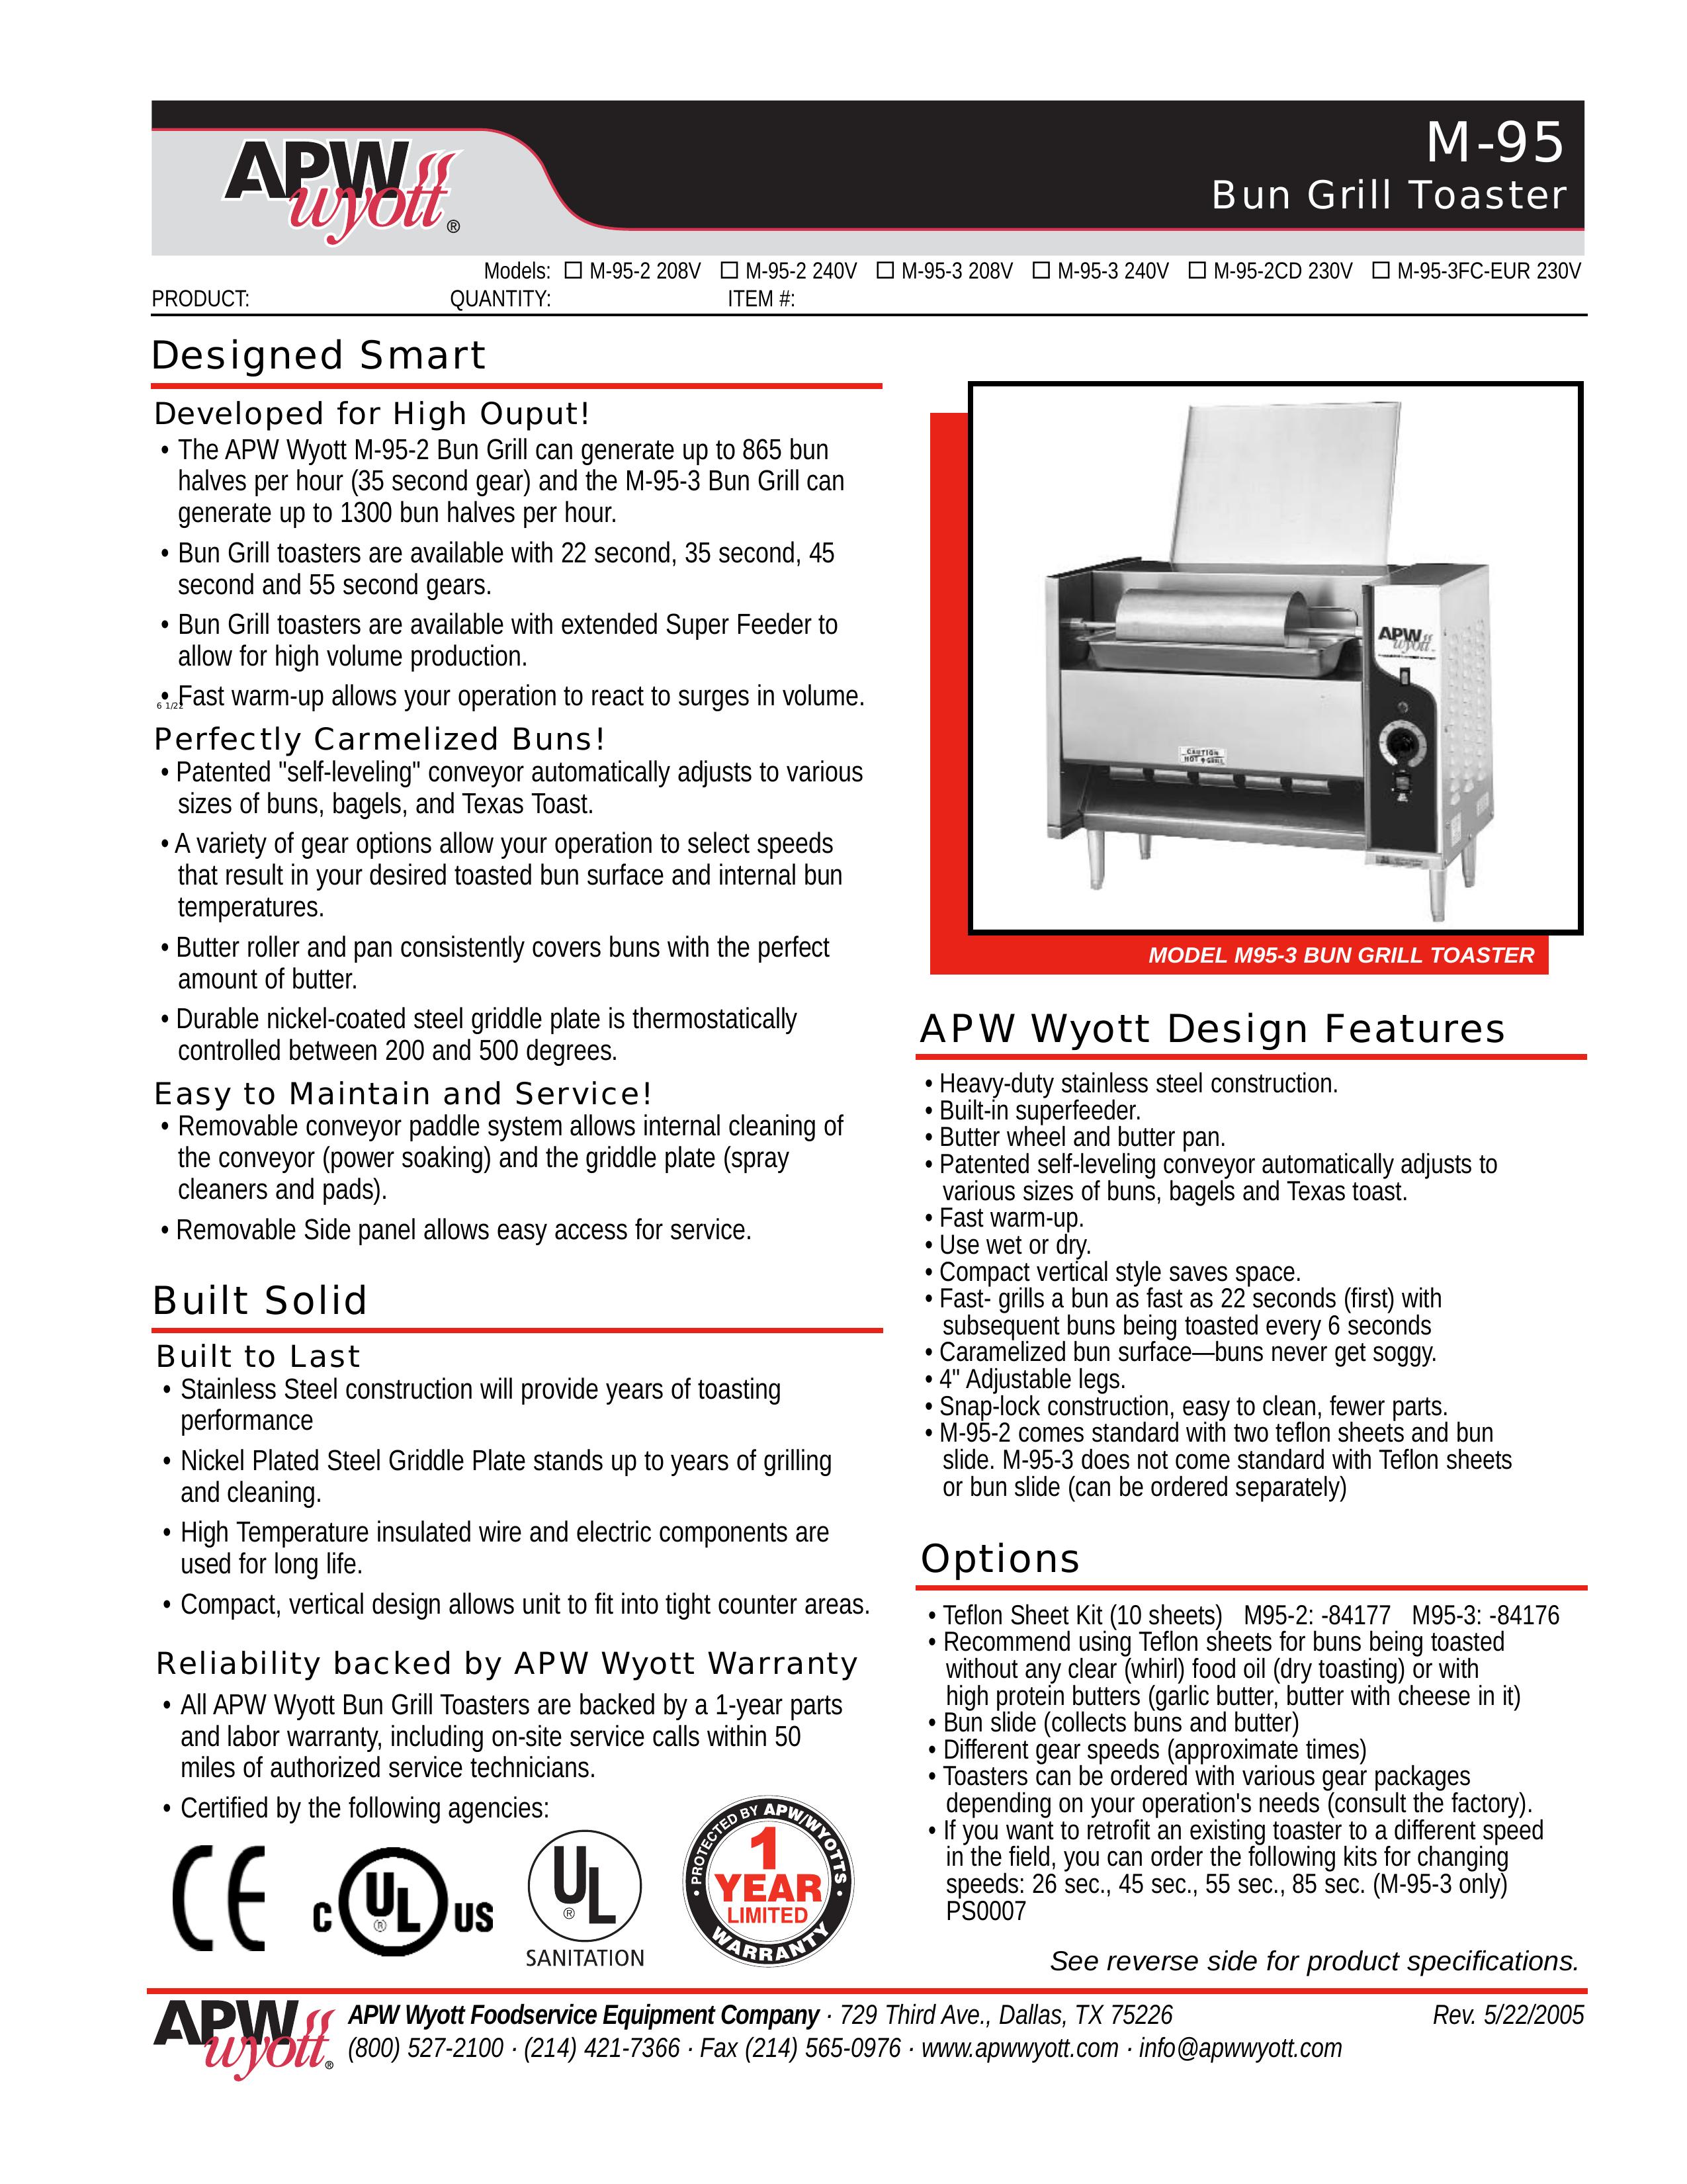 APW Wyott M-95-2CD 230V Toaster User Manual